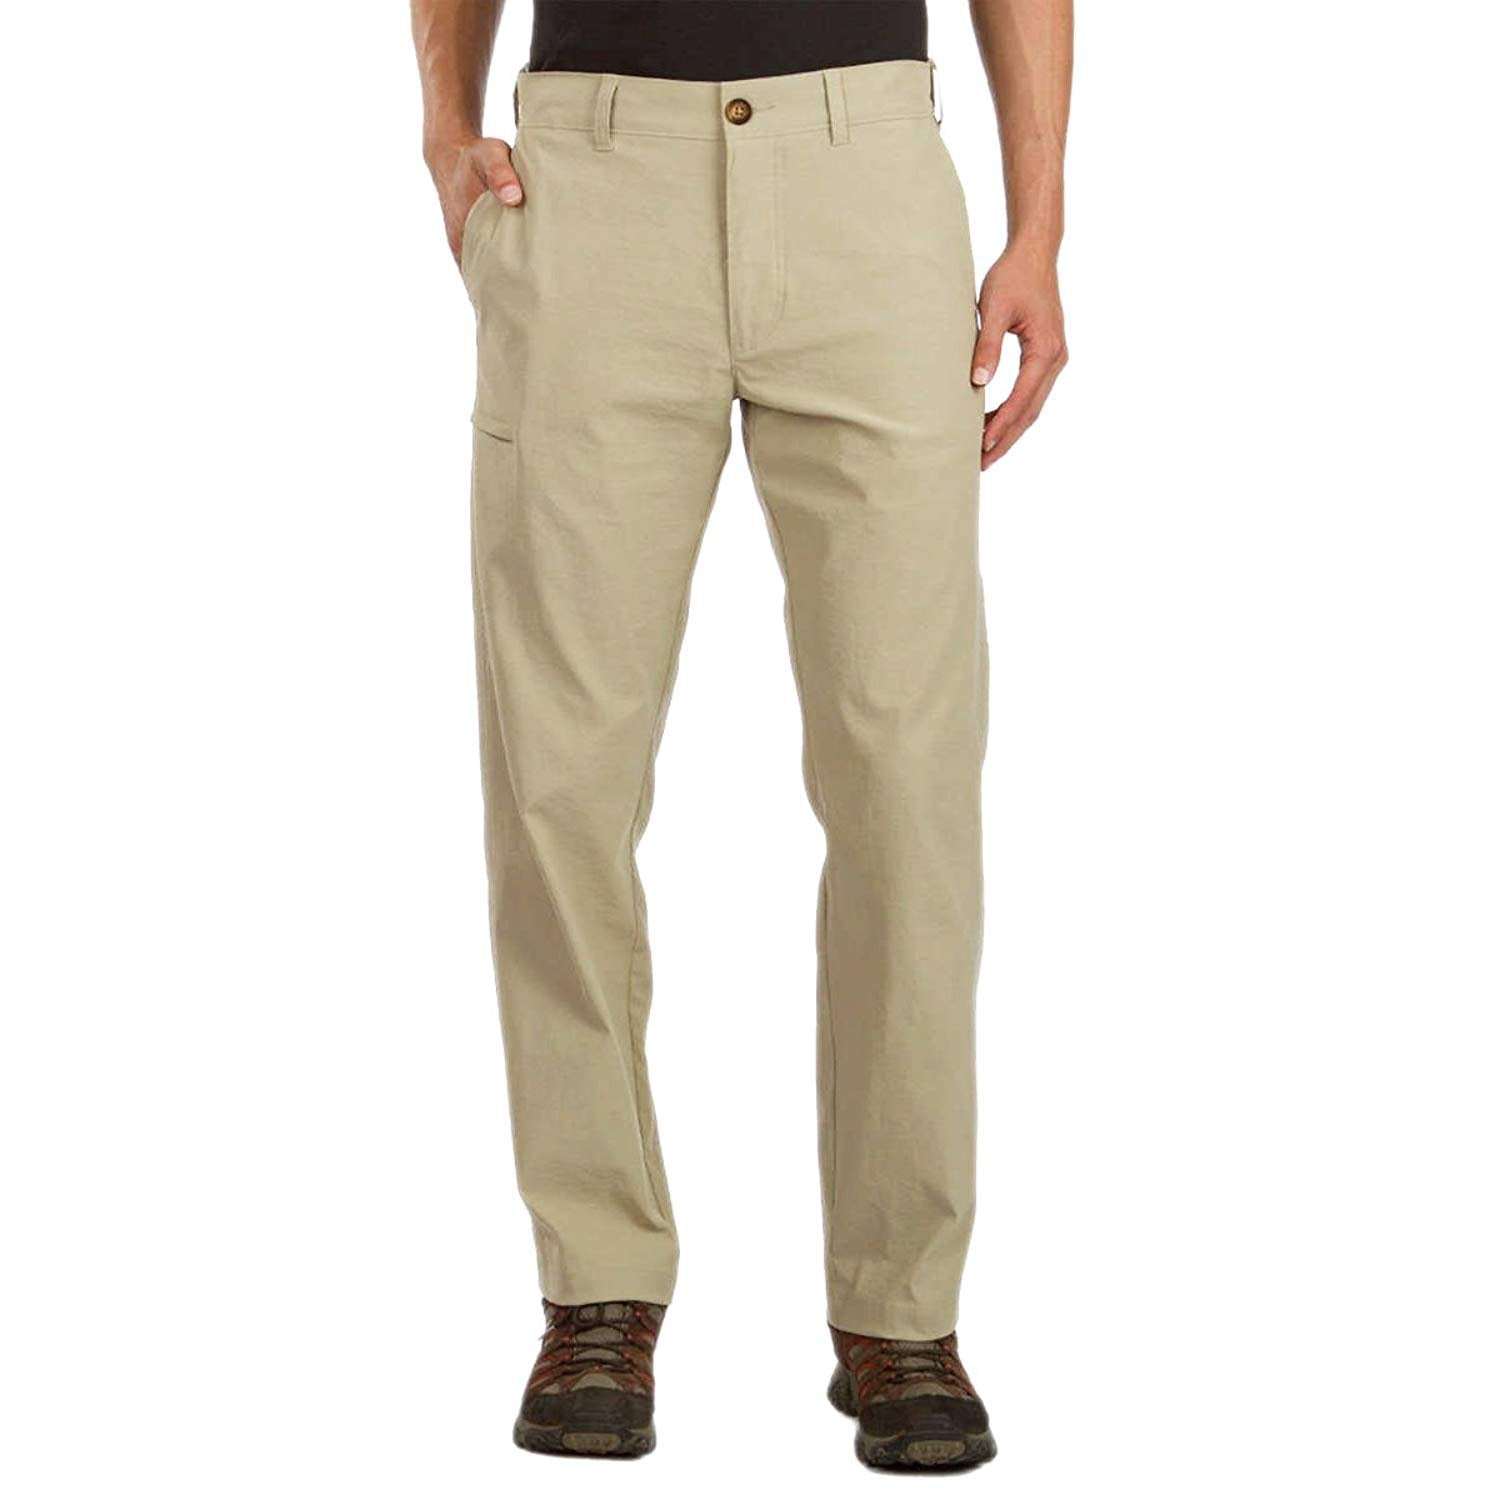 UB Tech Union Bay Men's Classic Fit Comfort Waist Chino Pants 42 x 32,  Desert